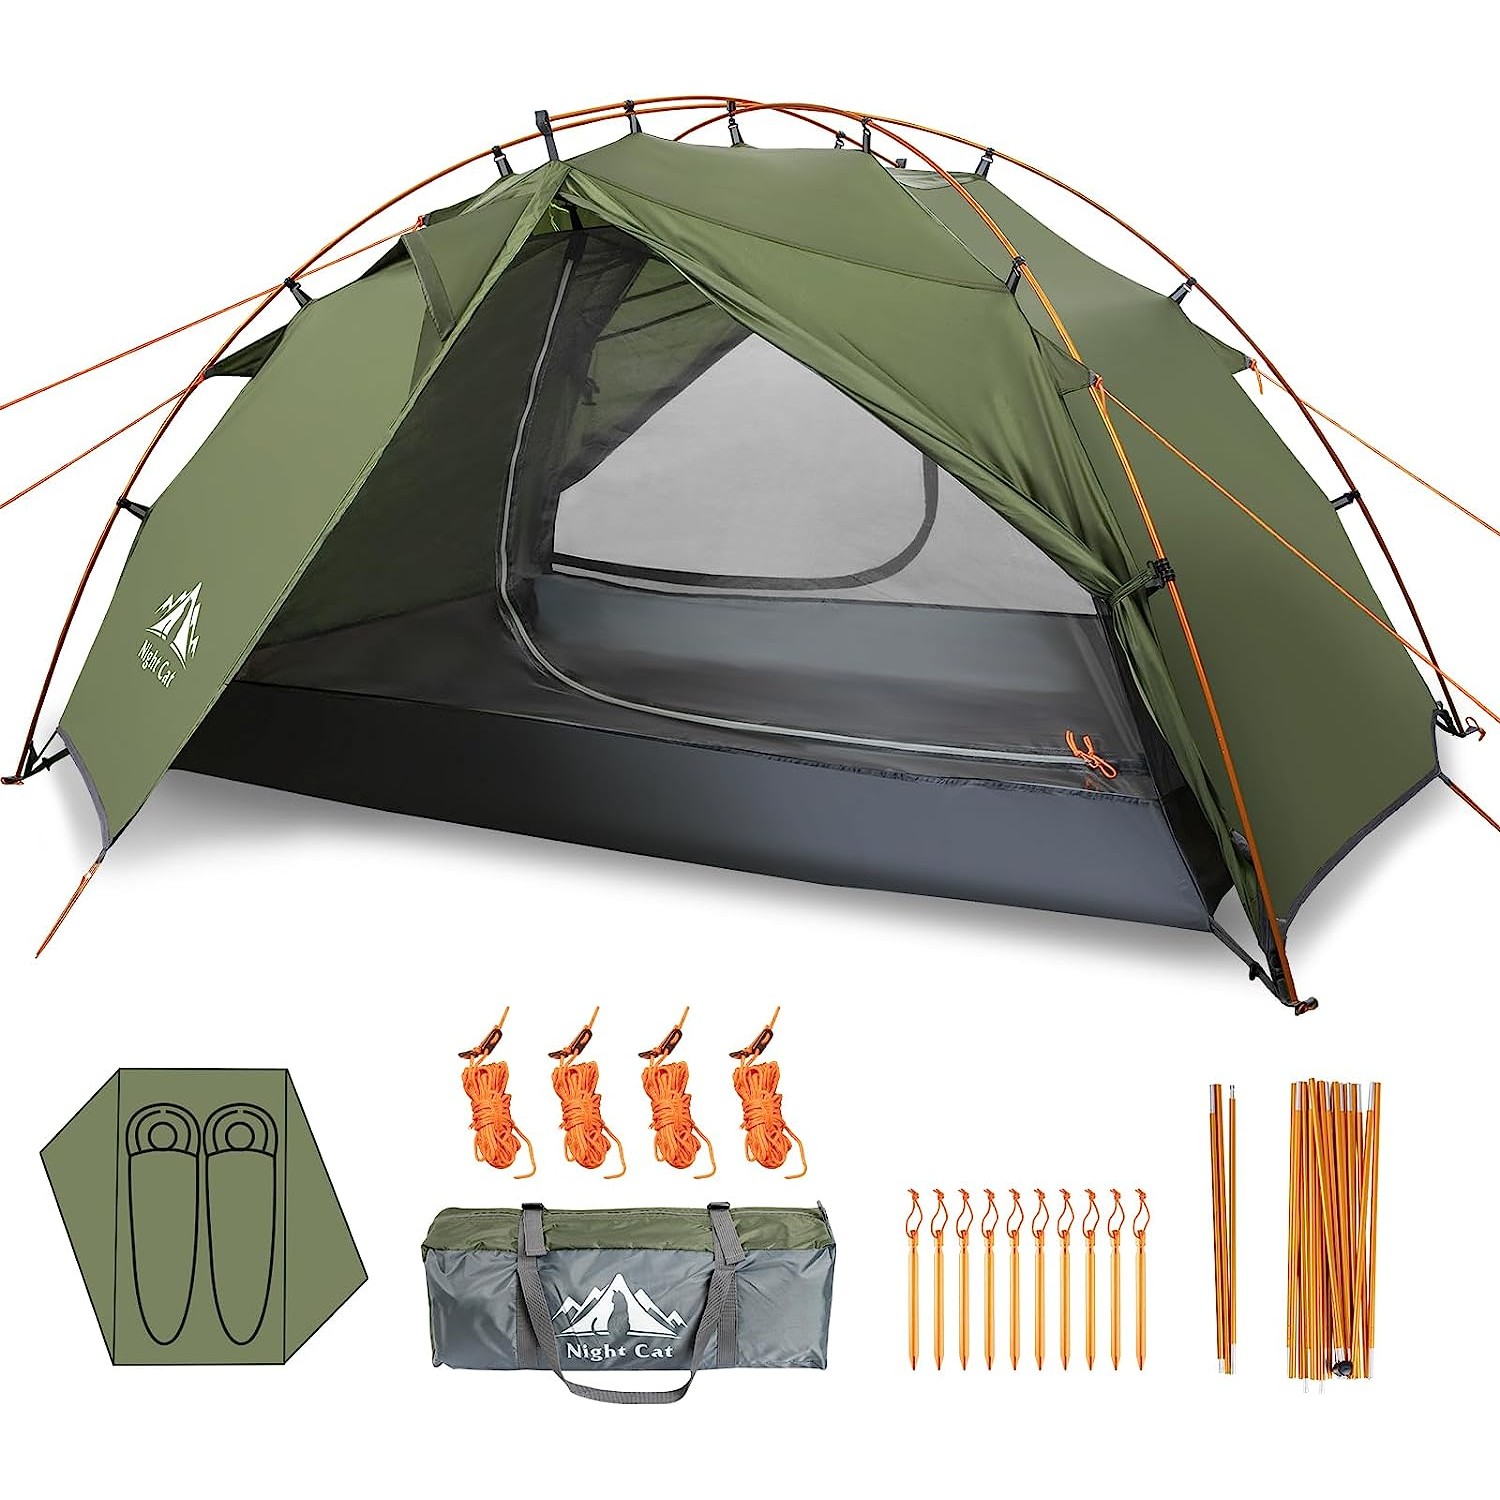 Палатка компакт. Компактная палатка. Кемпинг для кошек.